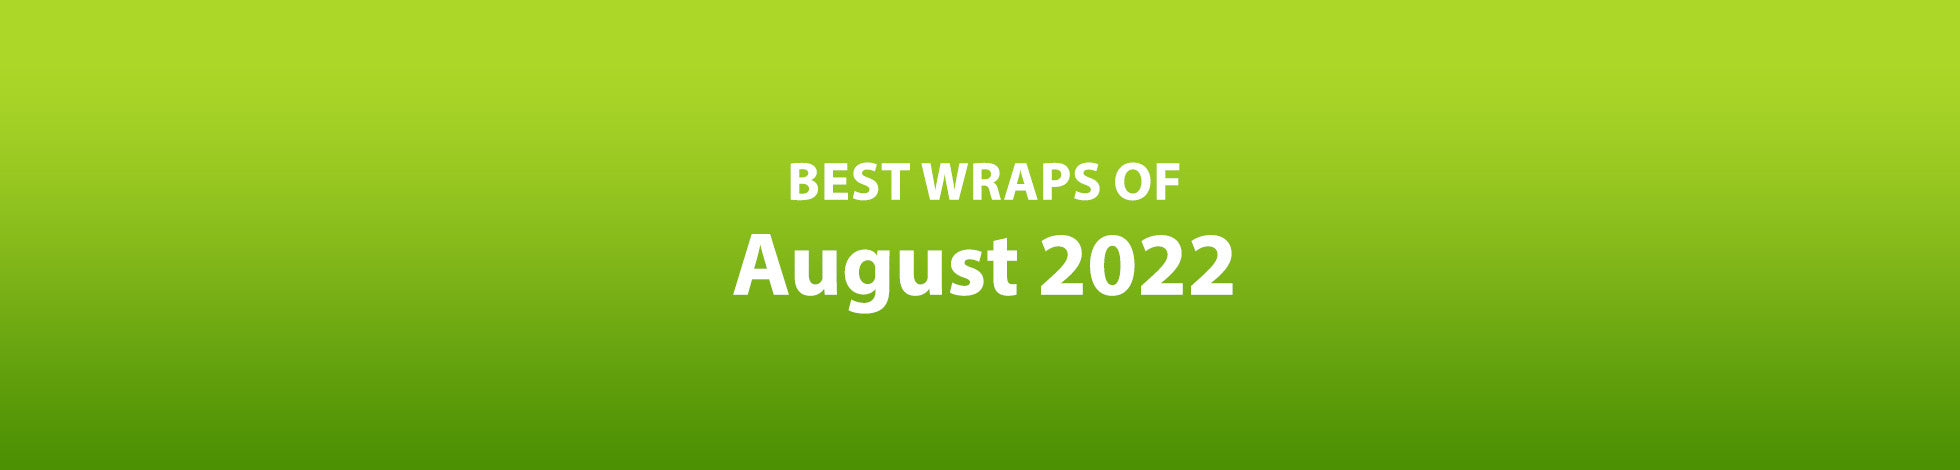 Best Car Wraps of August 2022